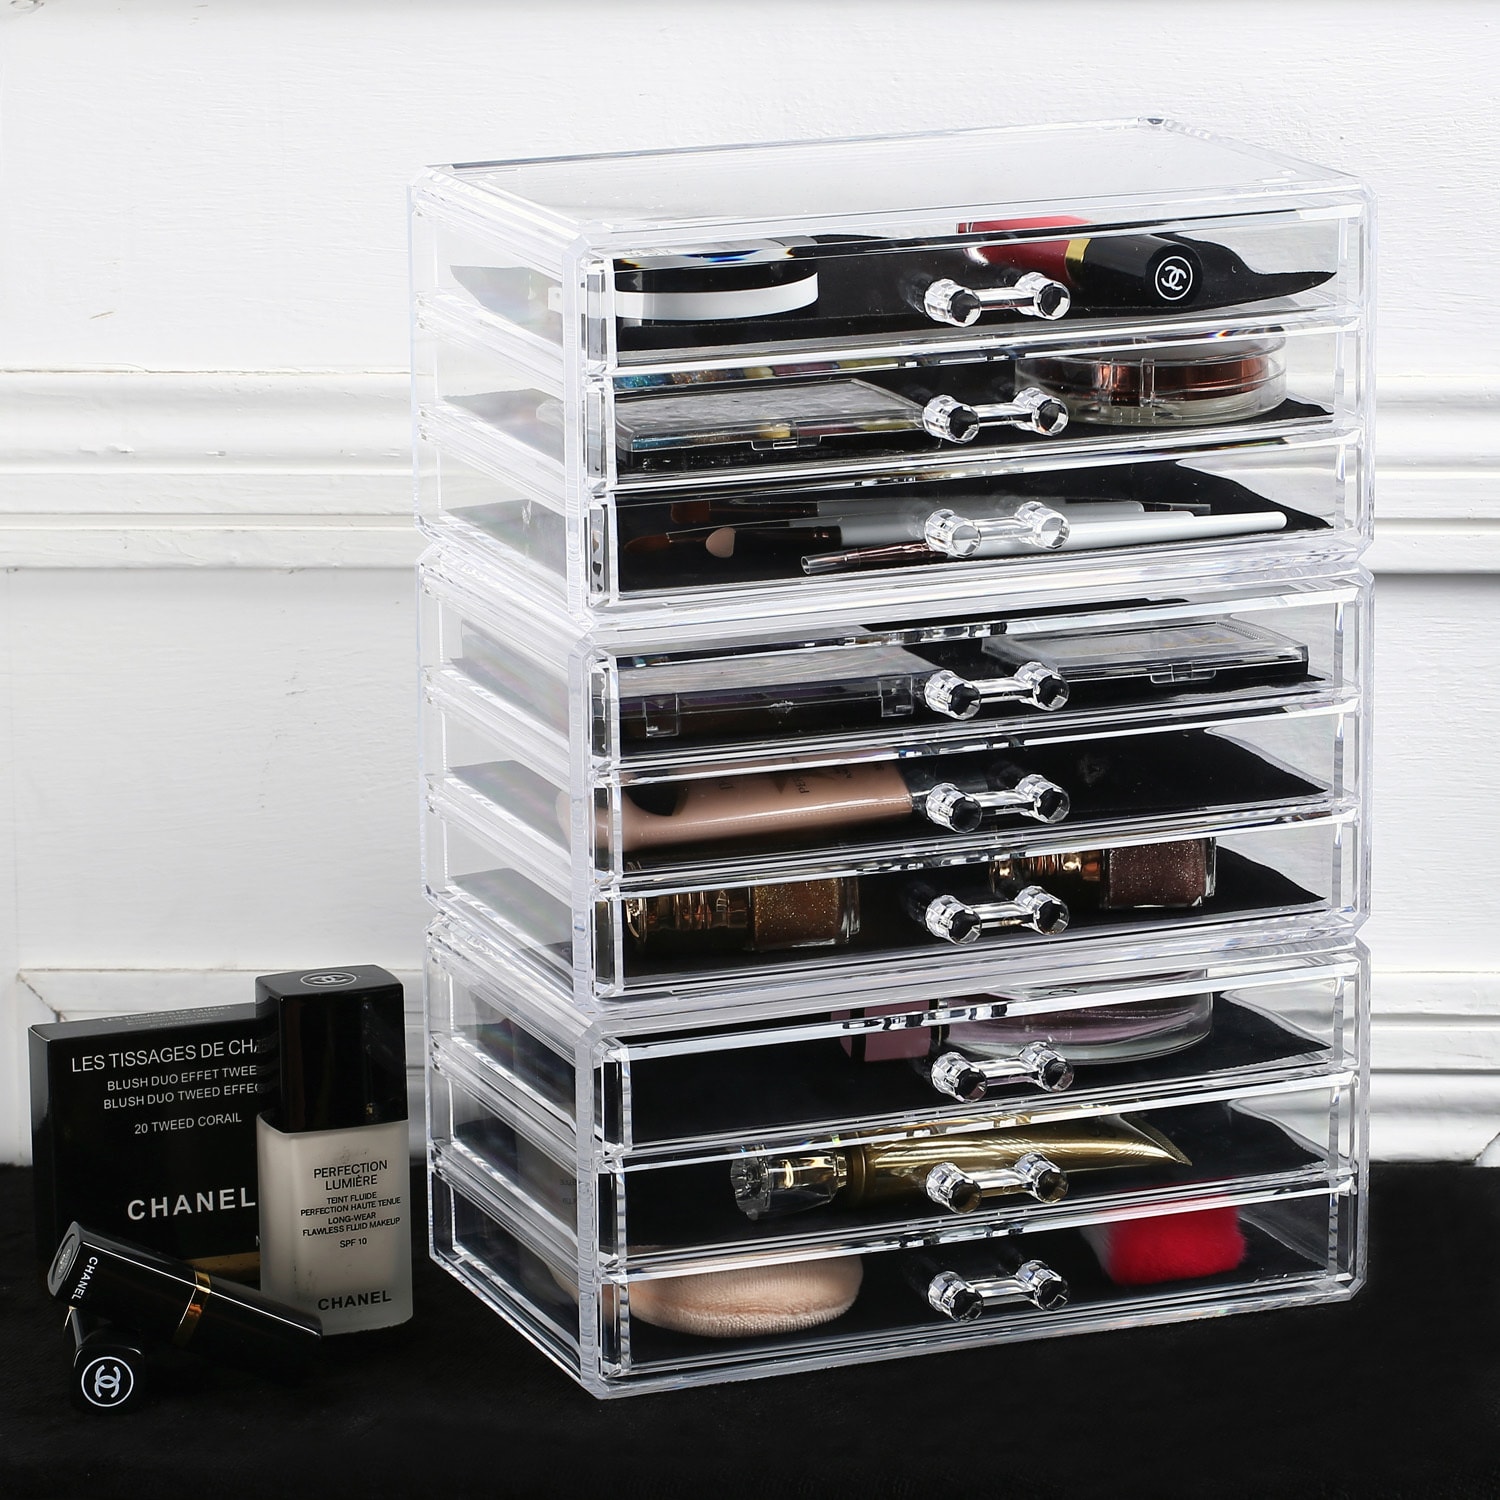 Makeup Organizer 3 Pieces Acrylic Cosmetic Storage Drawers and Jewelry  Storage - 9.26x5.31x11.61in - Bed Bath & Beyond - 31846816